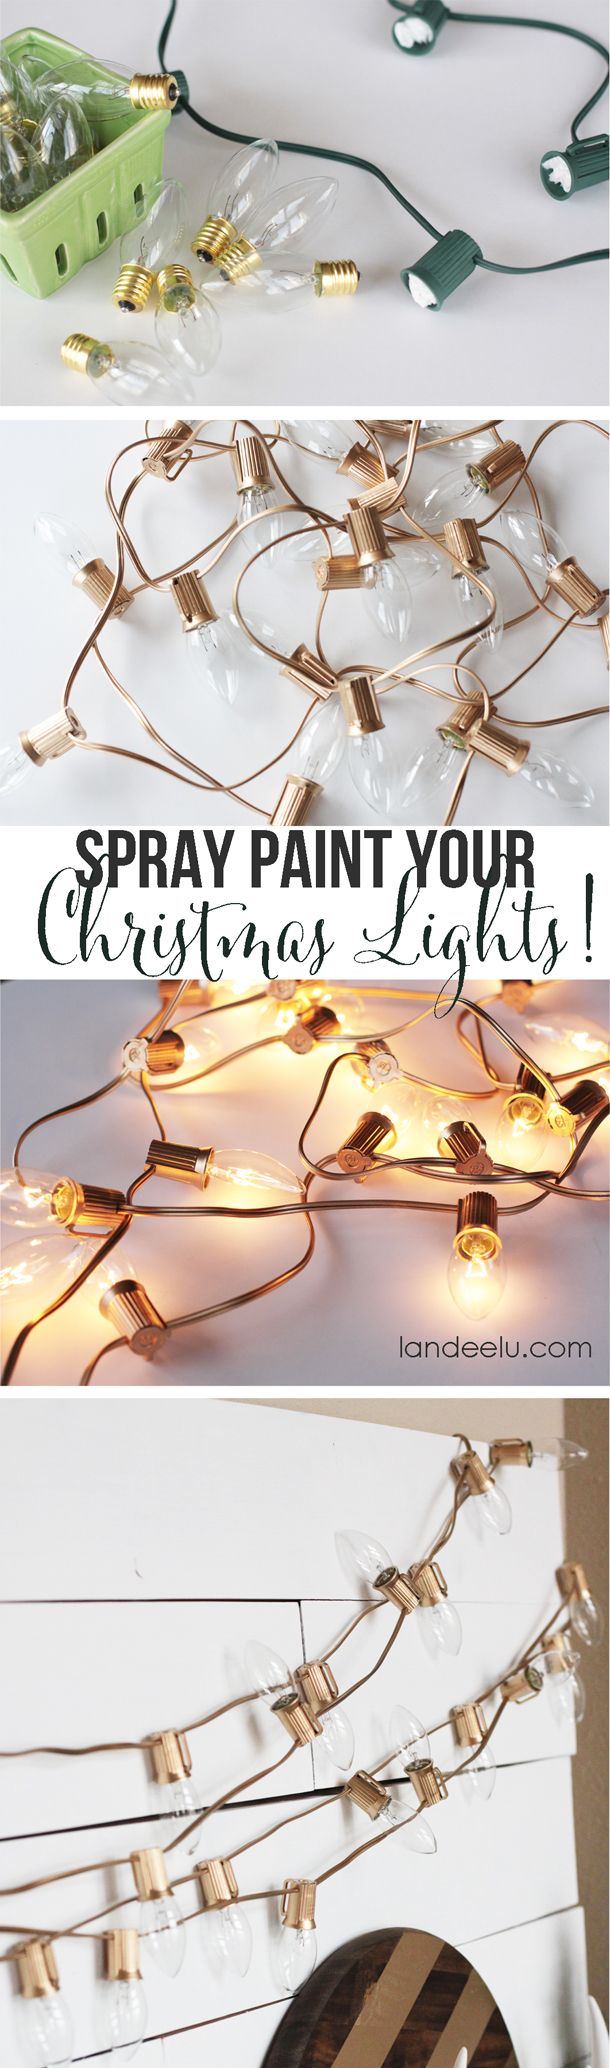 Spray Paint Your Christmas Lights | landeelu.com